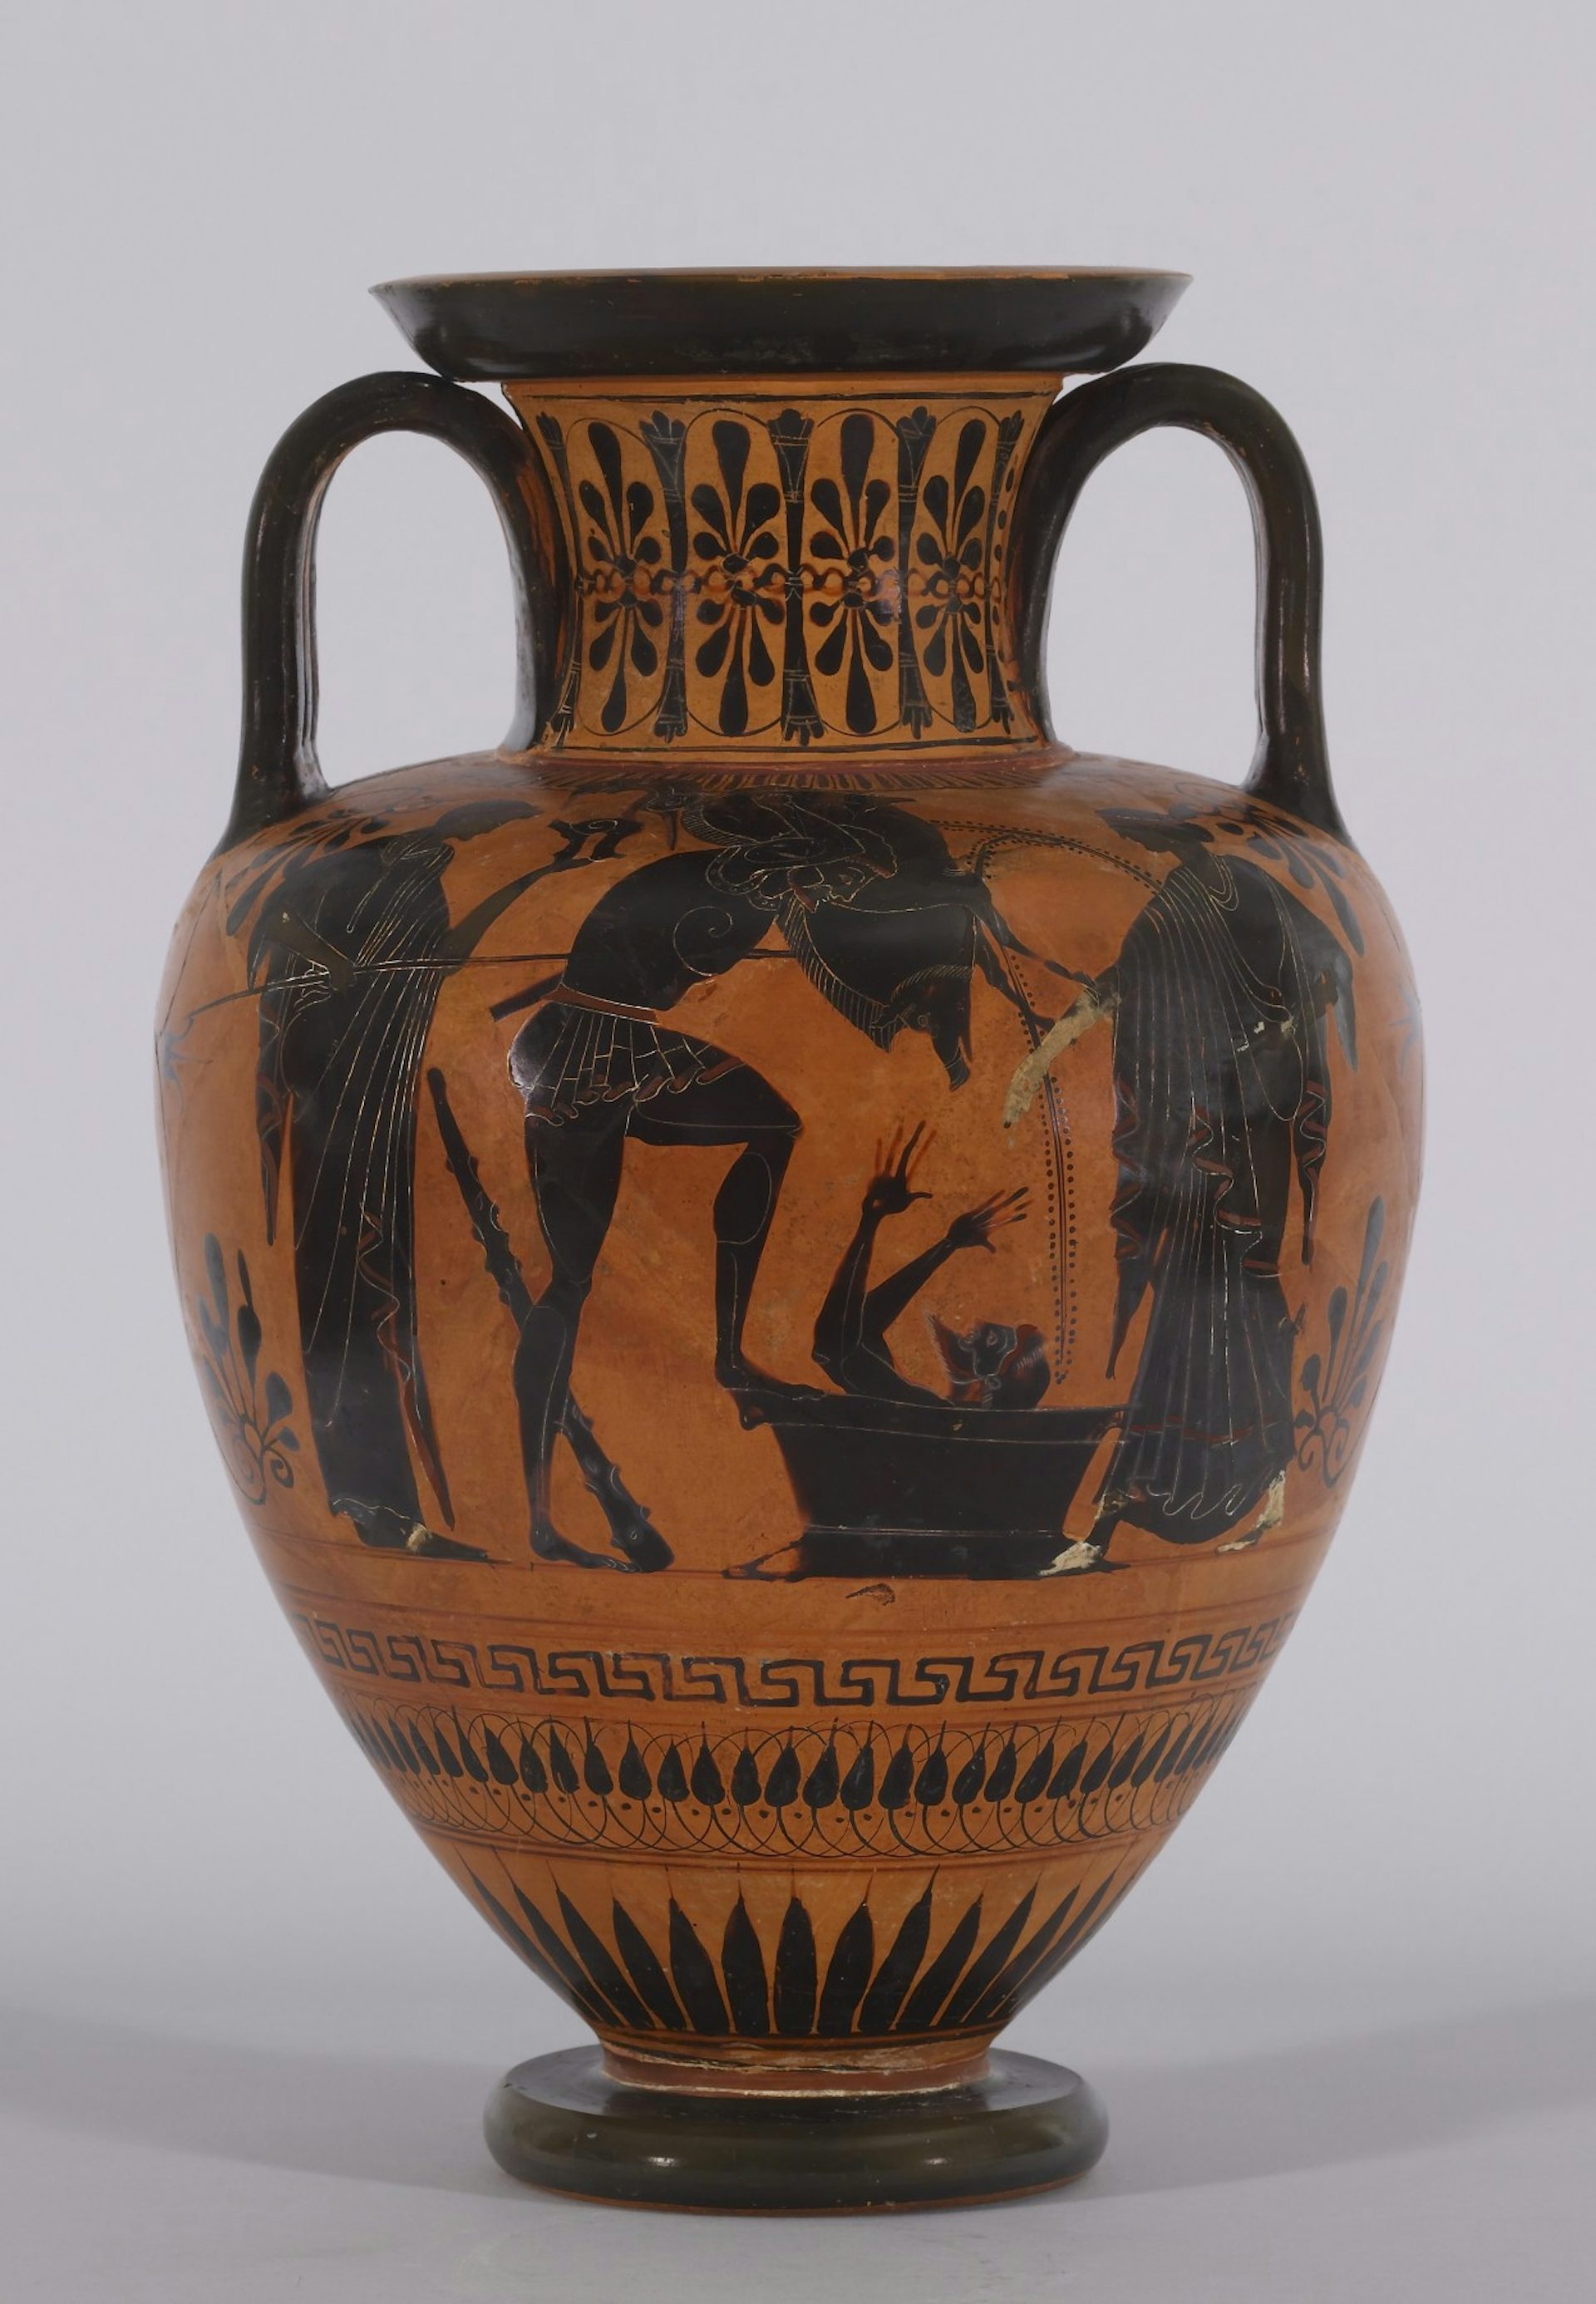 Vase painting of Heracles holding the Erymanthian Boar over Eurystheus